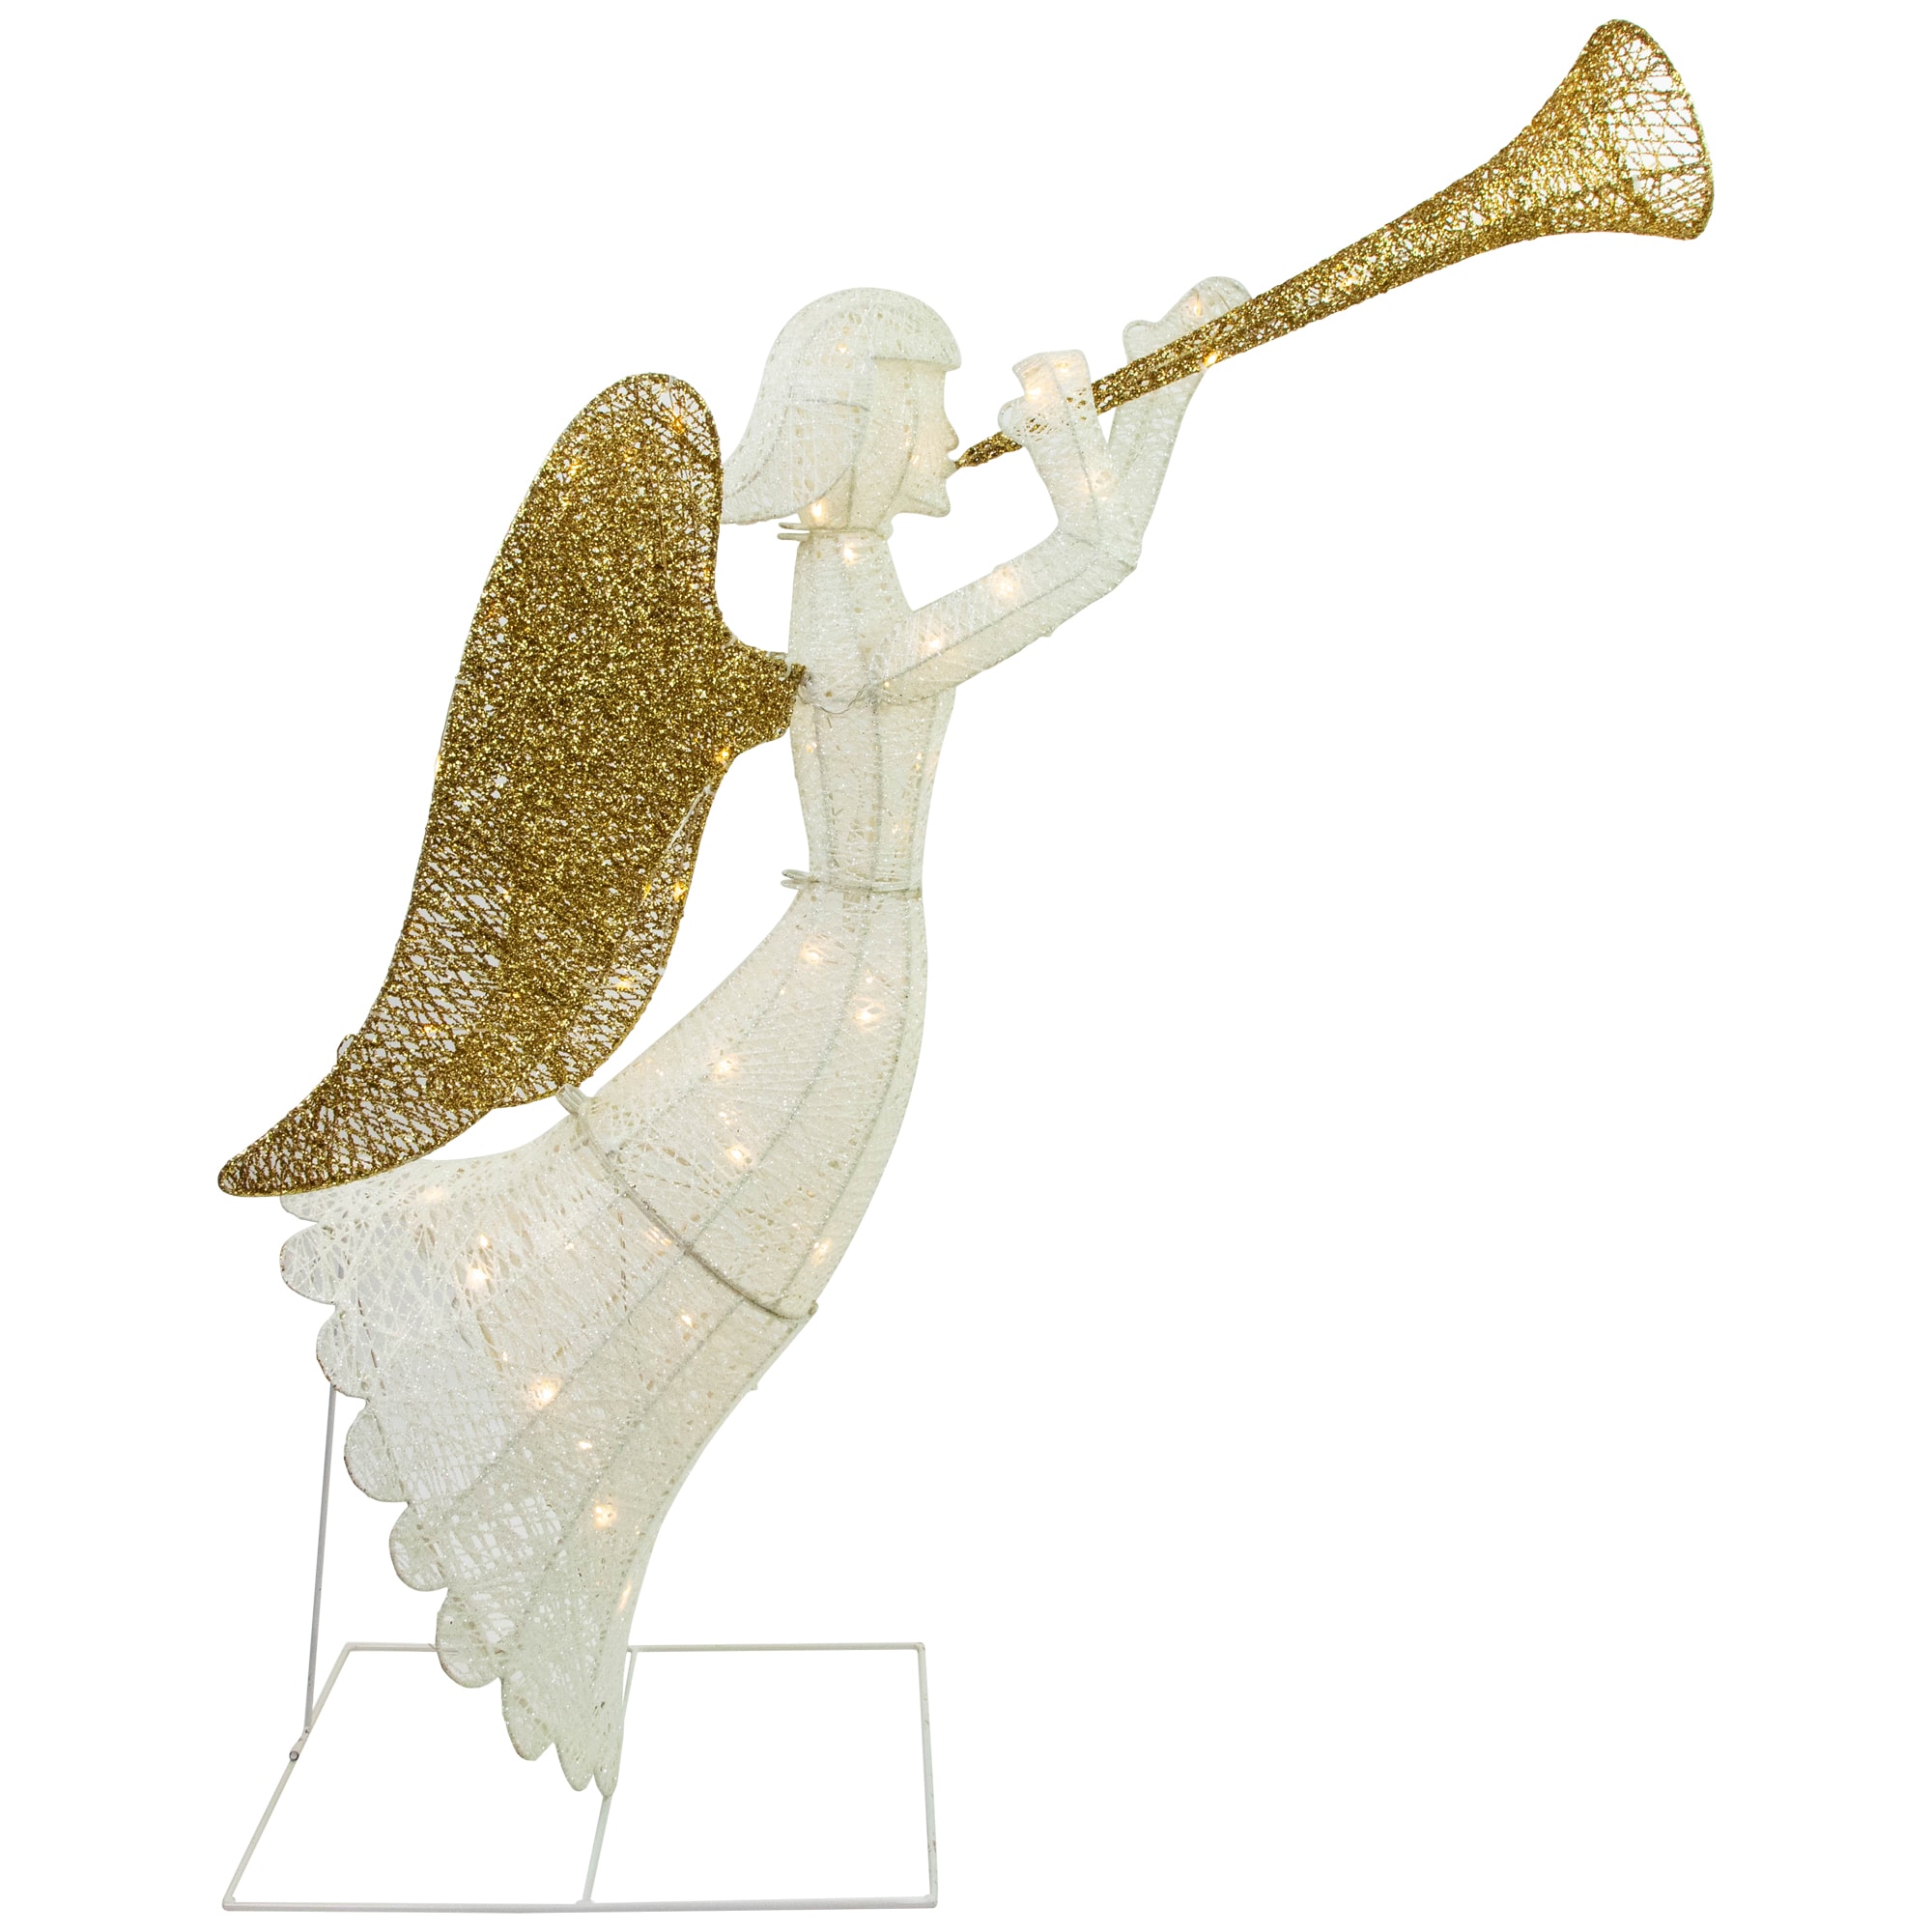 Carol Of The Bells 2-Foot Tall Illuminated Musical Angel Portrait